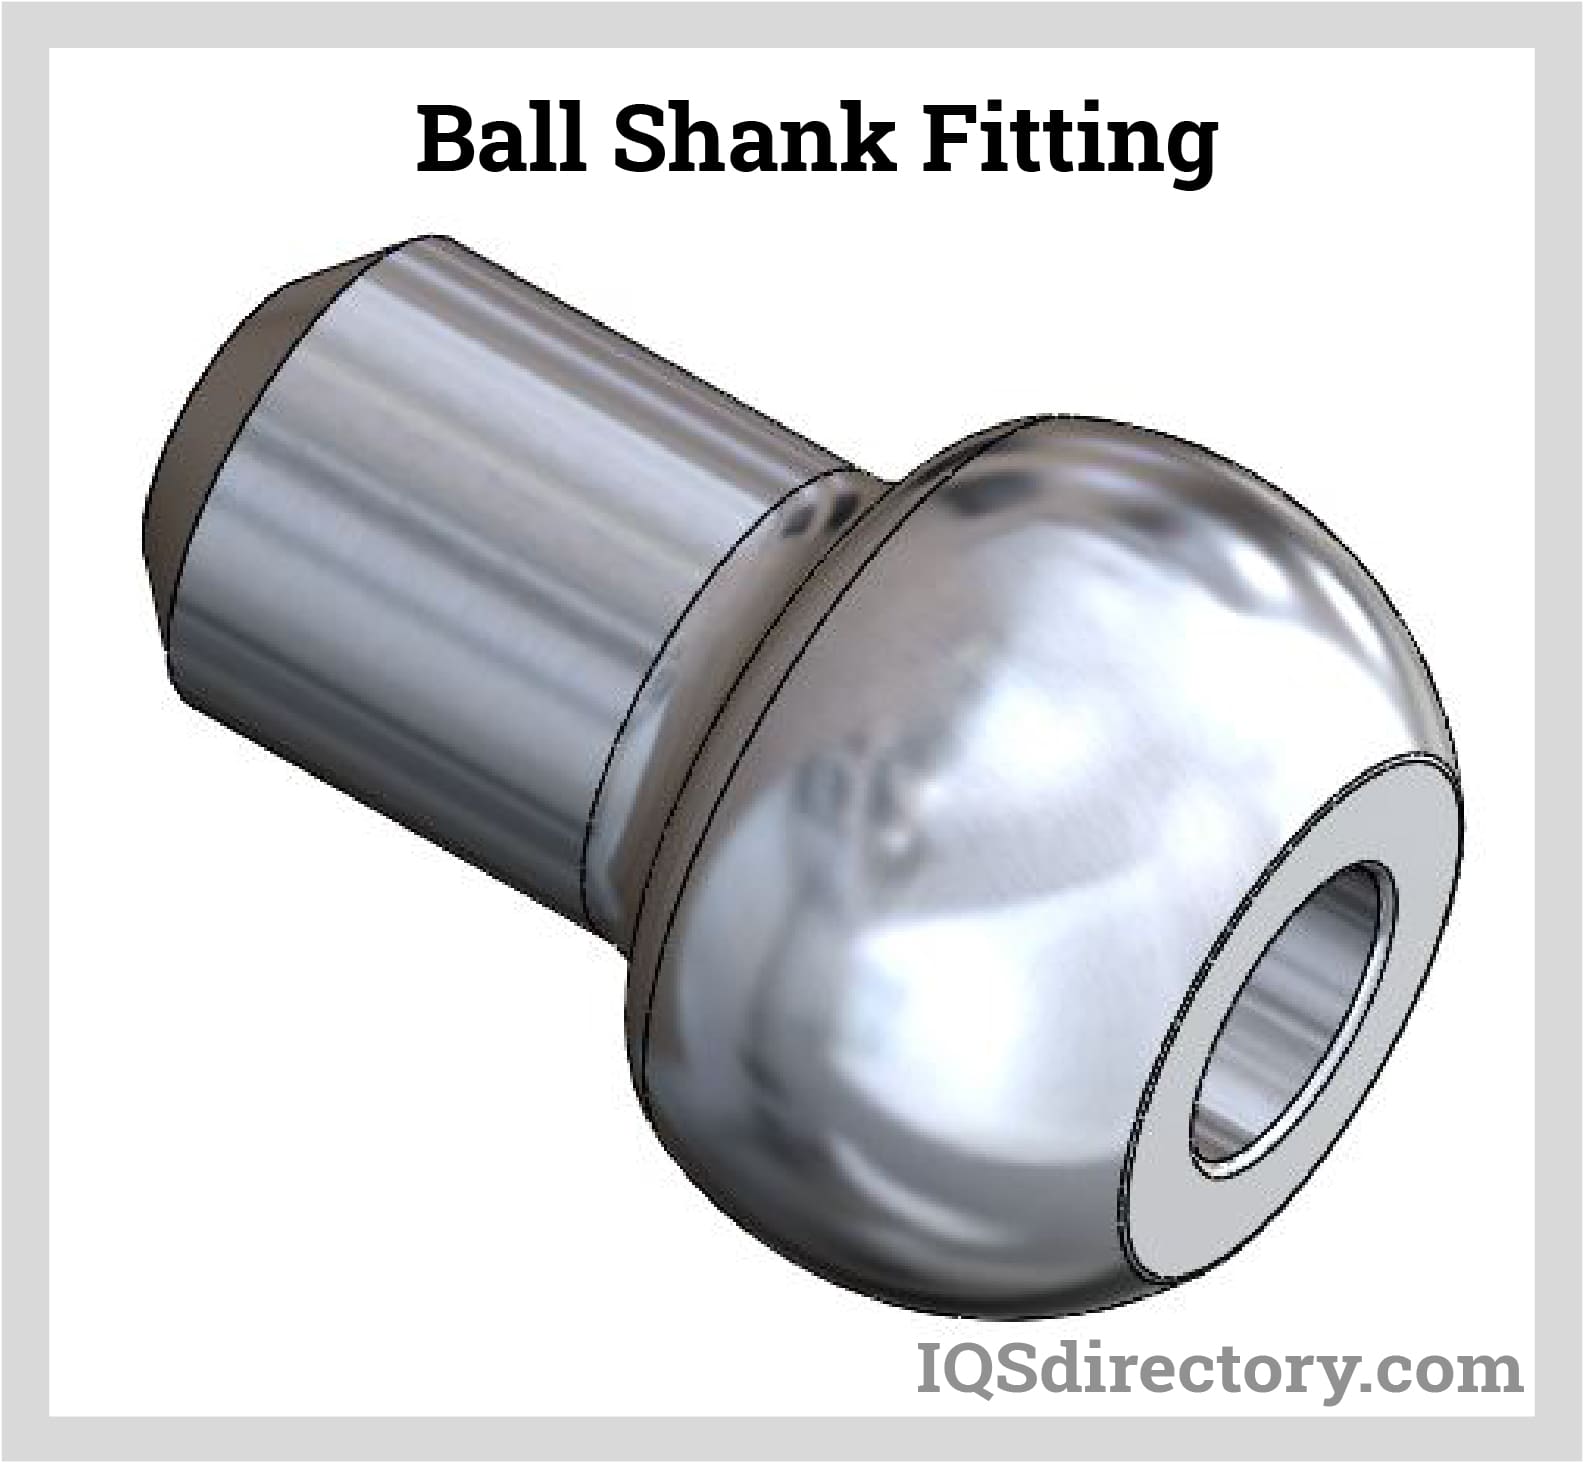 Ball Shank Fitting